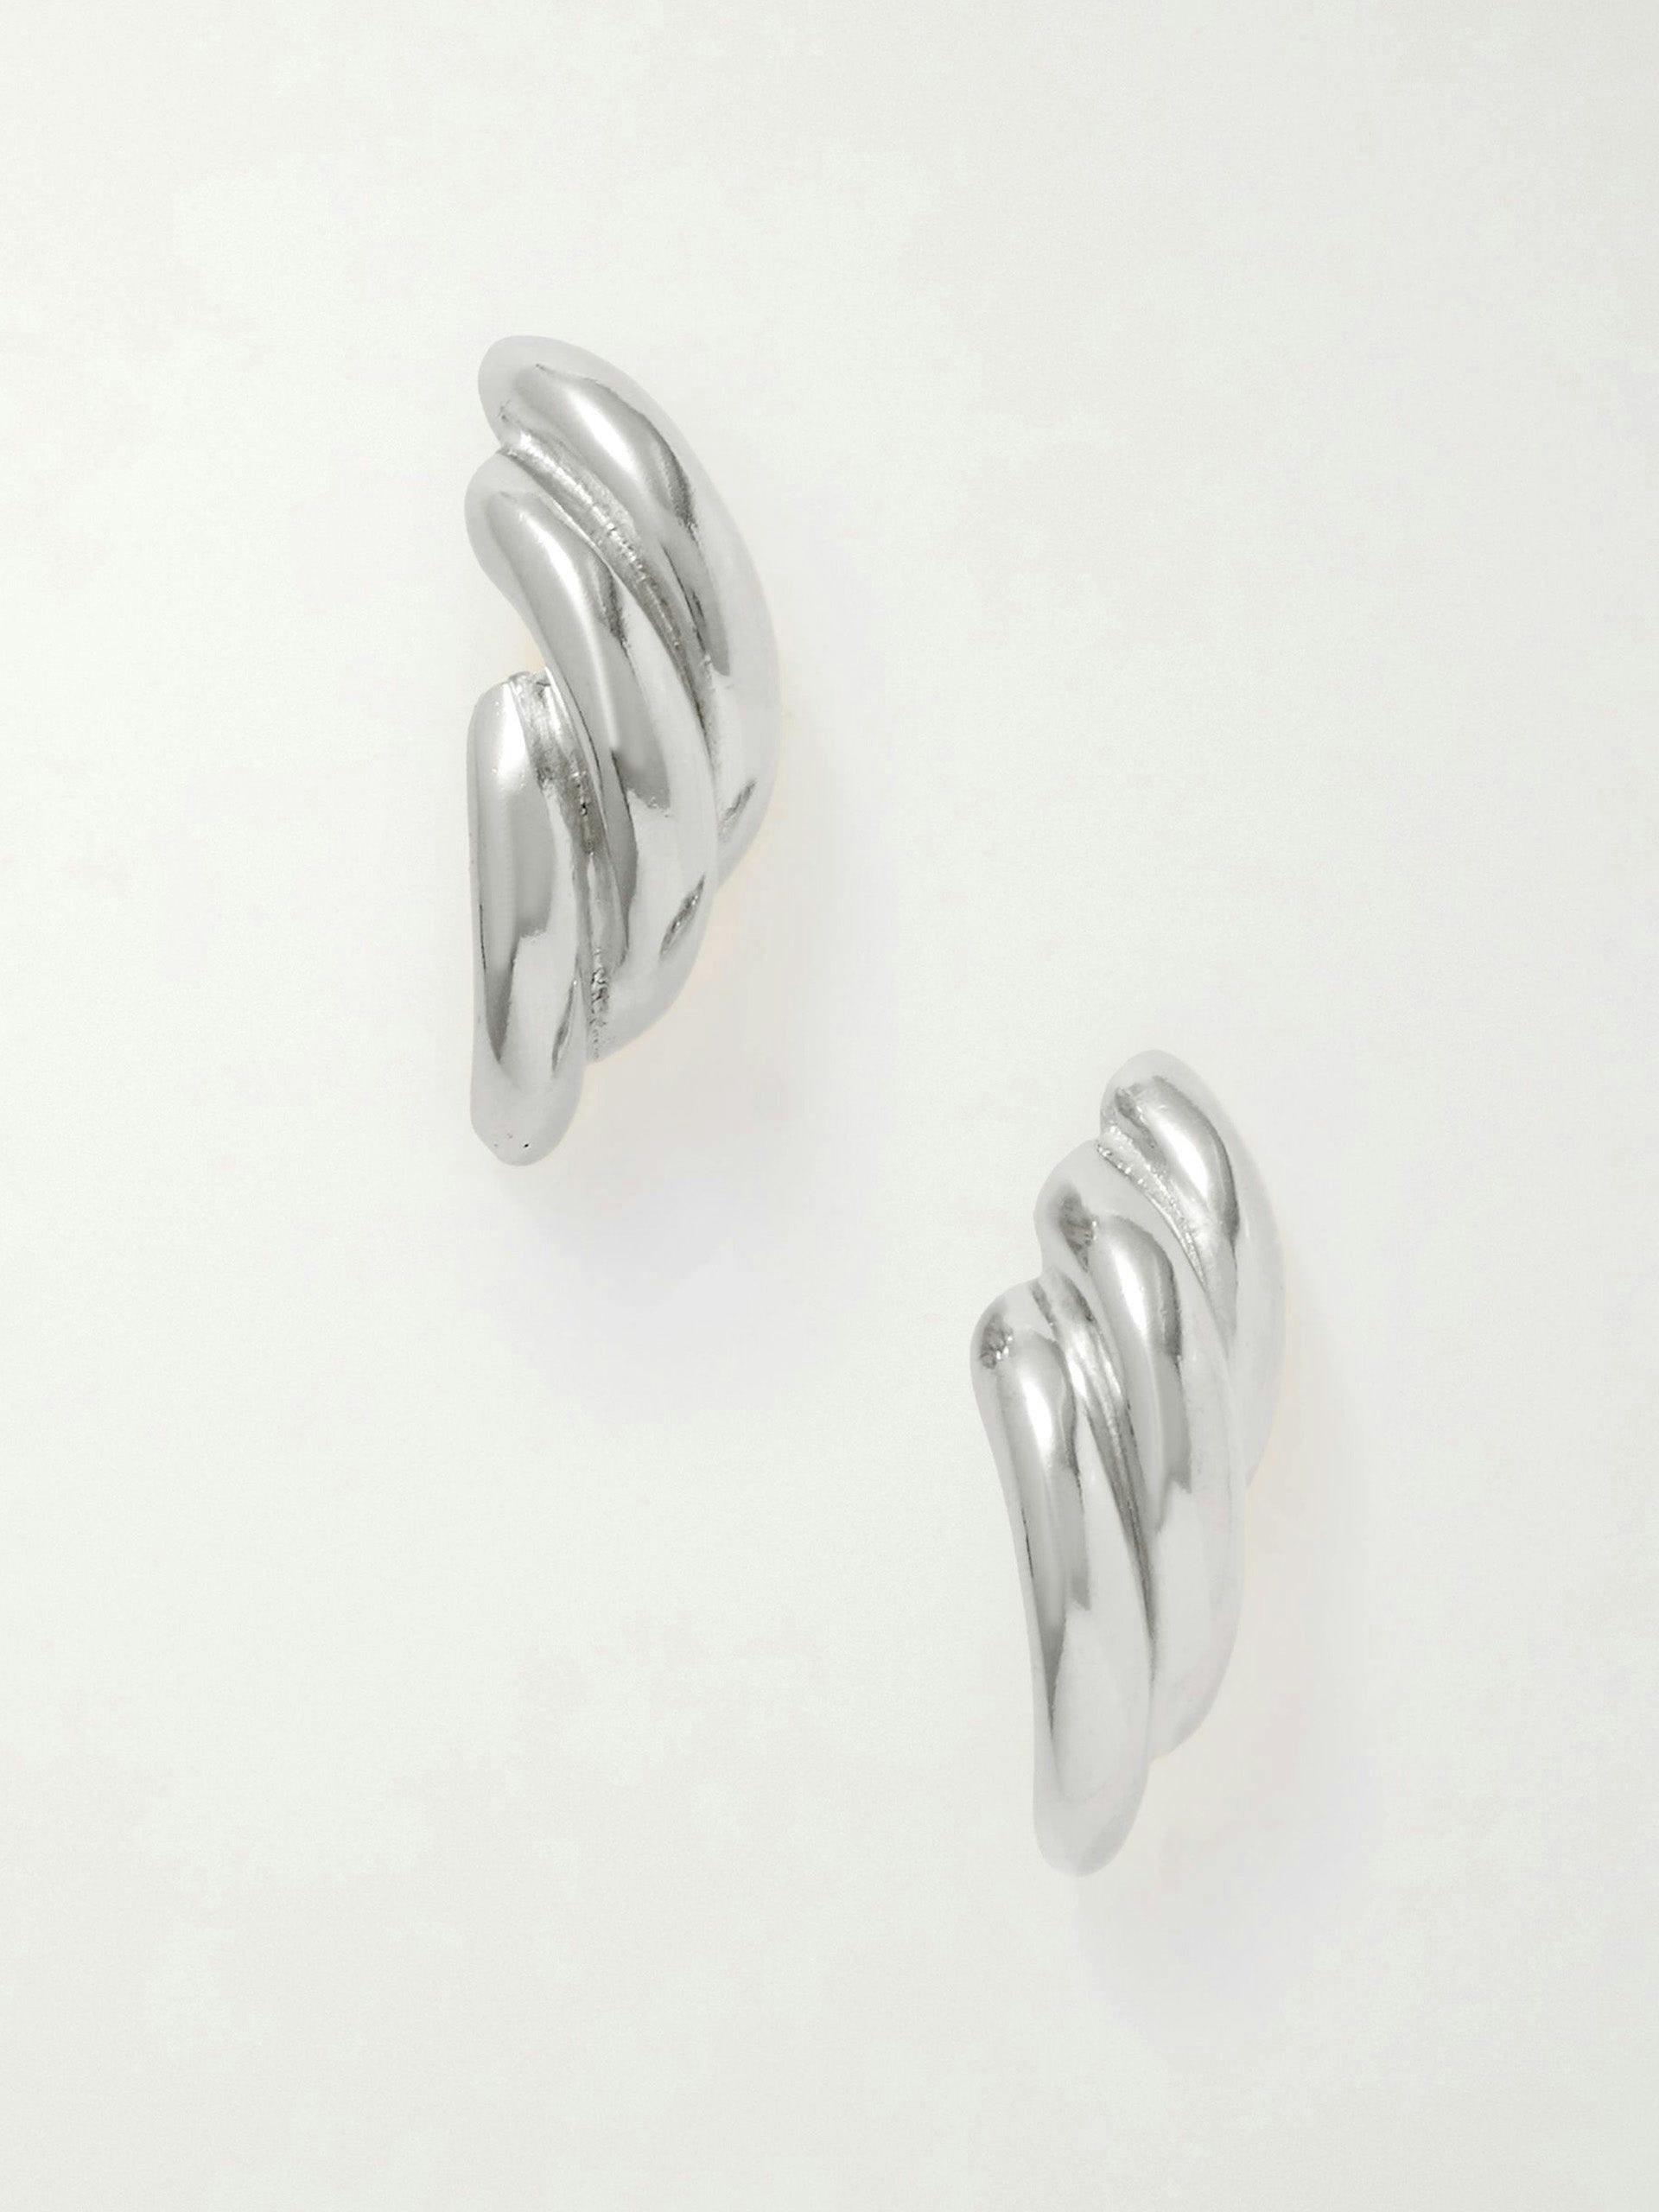 Kombos sterling silver earrings